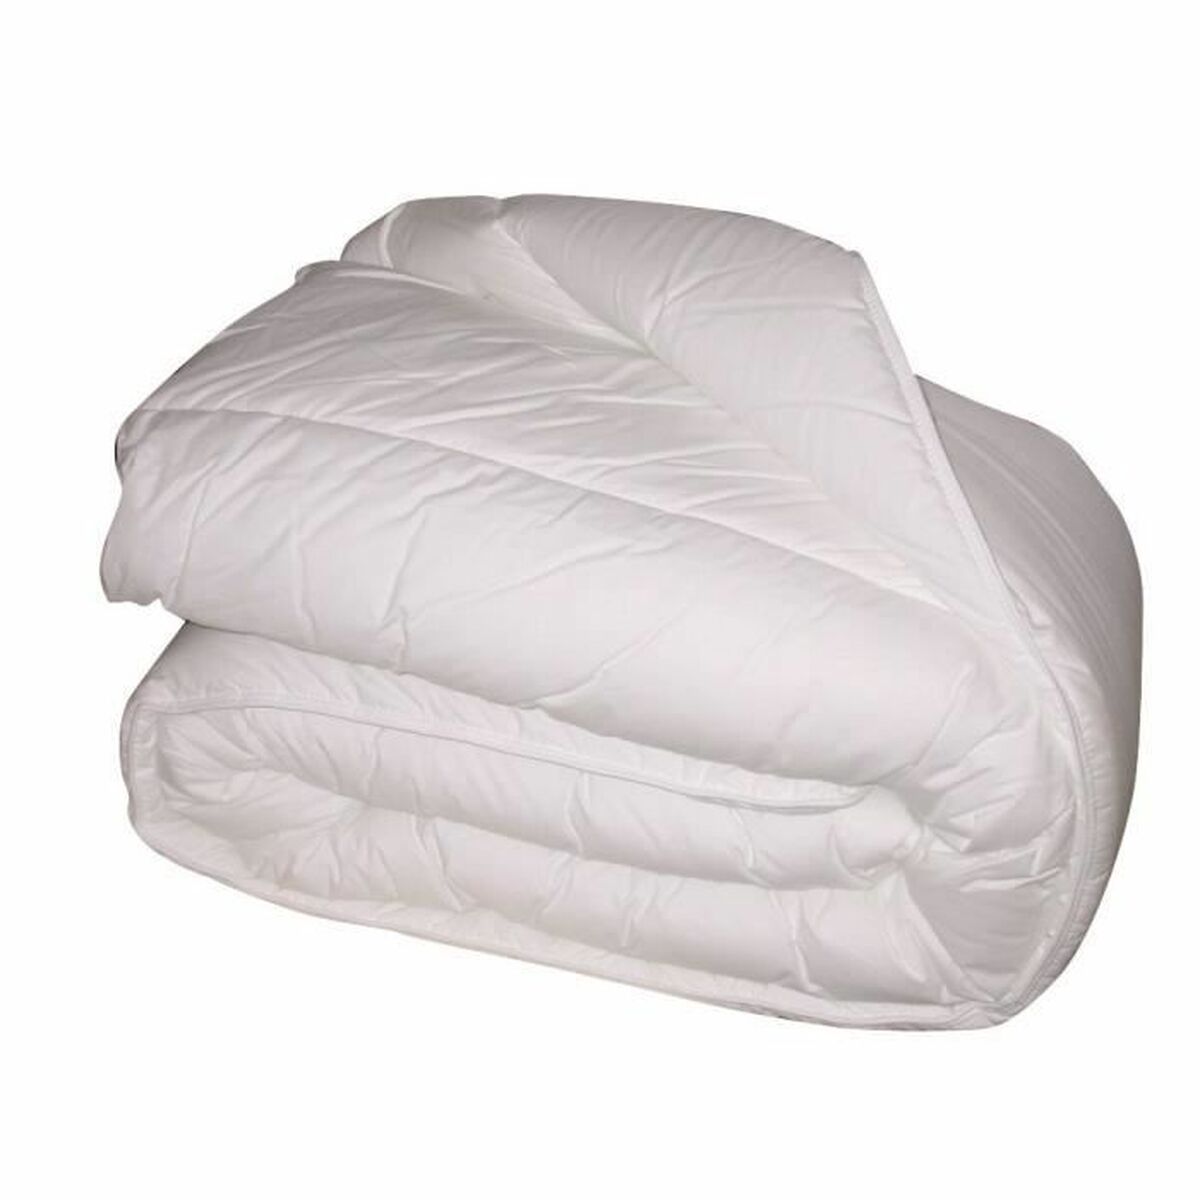 Blanket Blanreve White Dust mite prevention 420 g/m² 200 x 200 cm